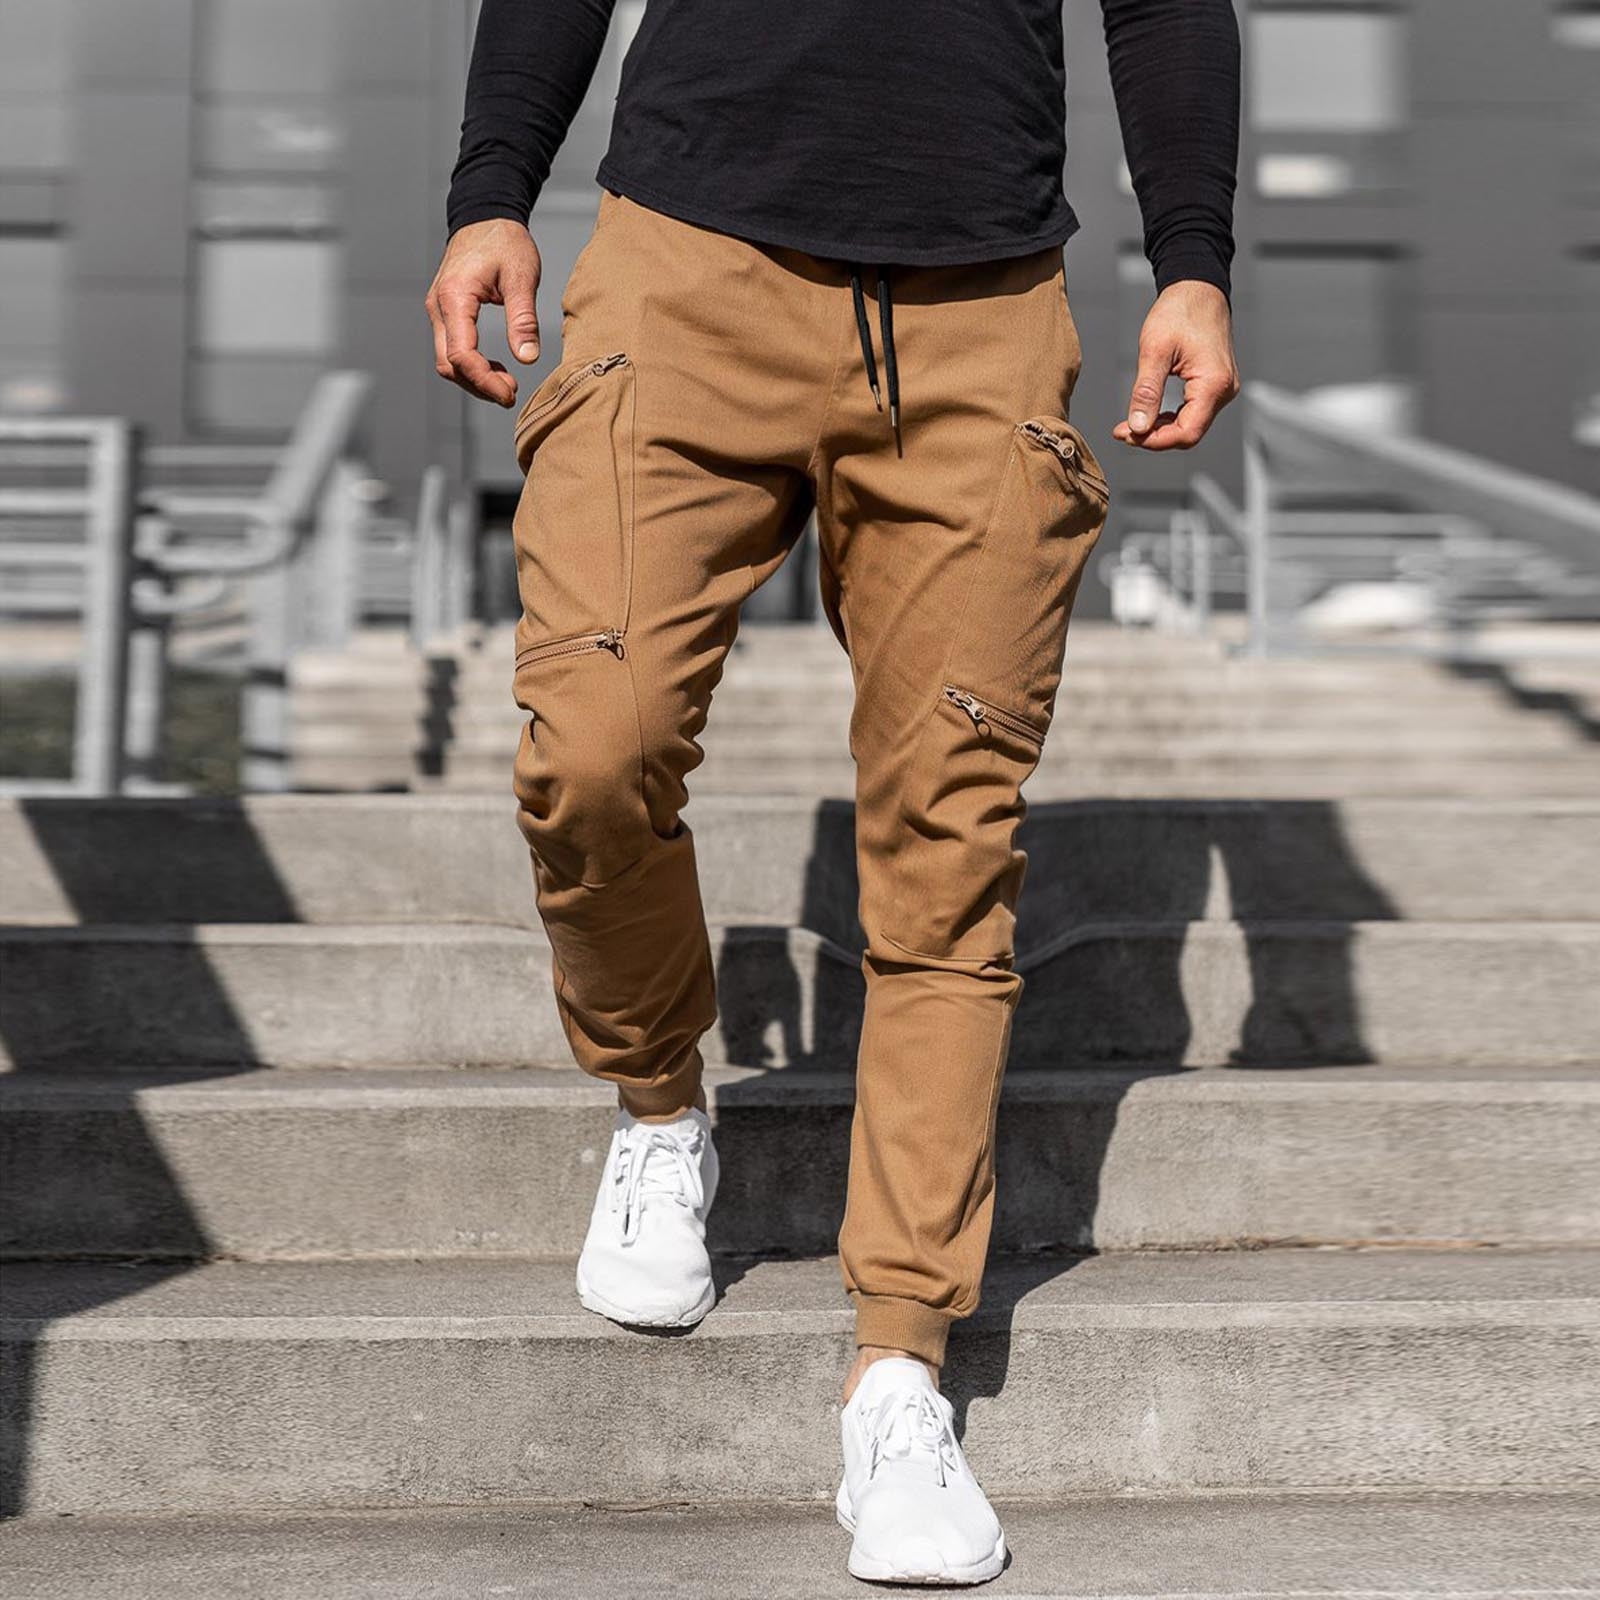 Plaid&Plain Men's Skinny Stretchy Khaki Pants Colored Pants Slim Fit Slacks  Tapered Trousers 819 Khaki 30X34 : Buy Online at Best Price in KSA - Souq  is now Amazon.sa: Fashion